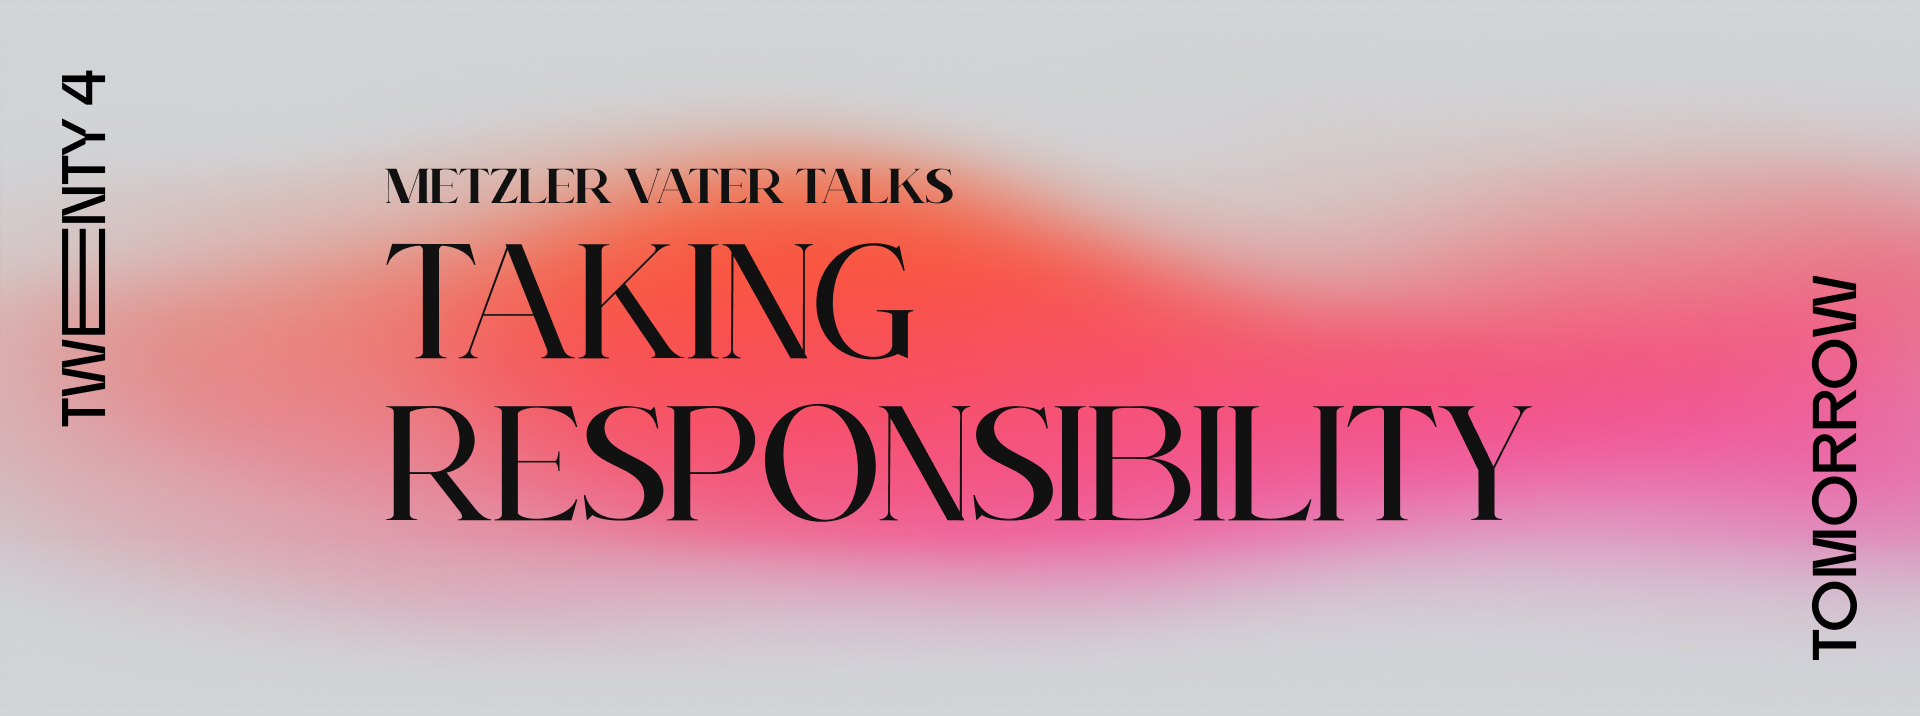 Header_taking_responsibility